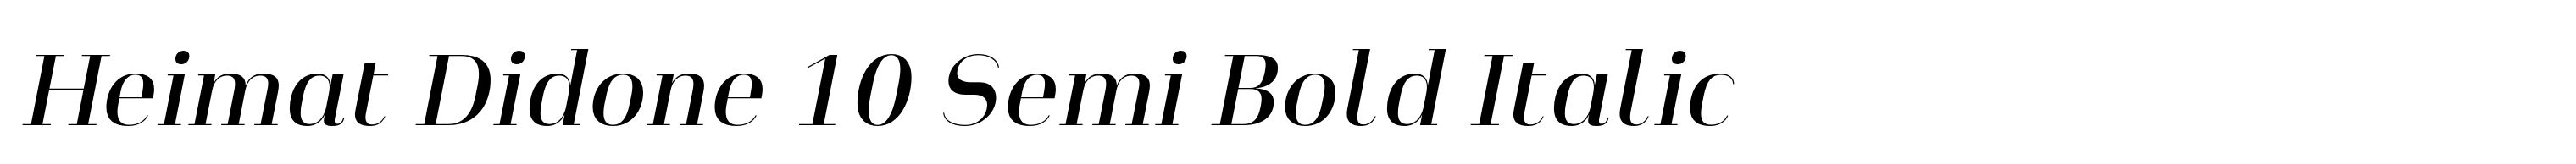 Heimat Didone 10 Semi Bold Italic